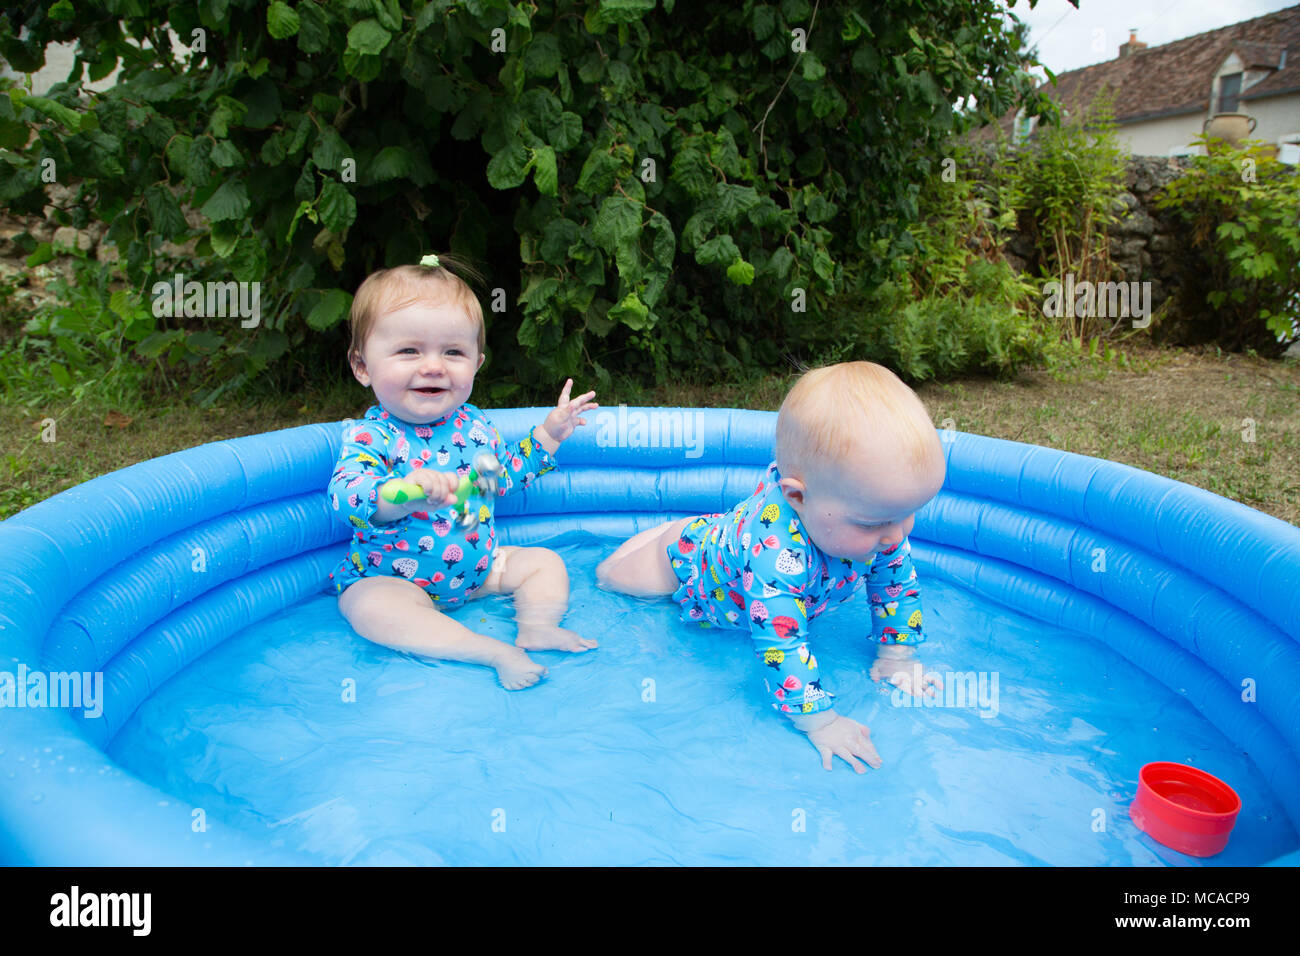 Baby Outdoor Pool Children's Kids Amusement Swimming Paddling Garden Play Fun UK 